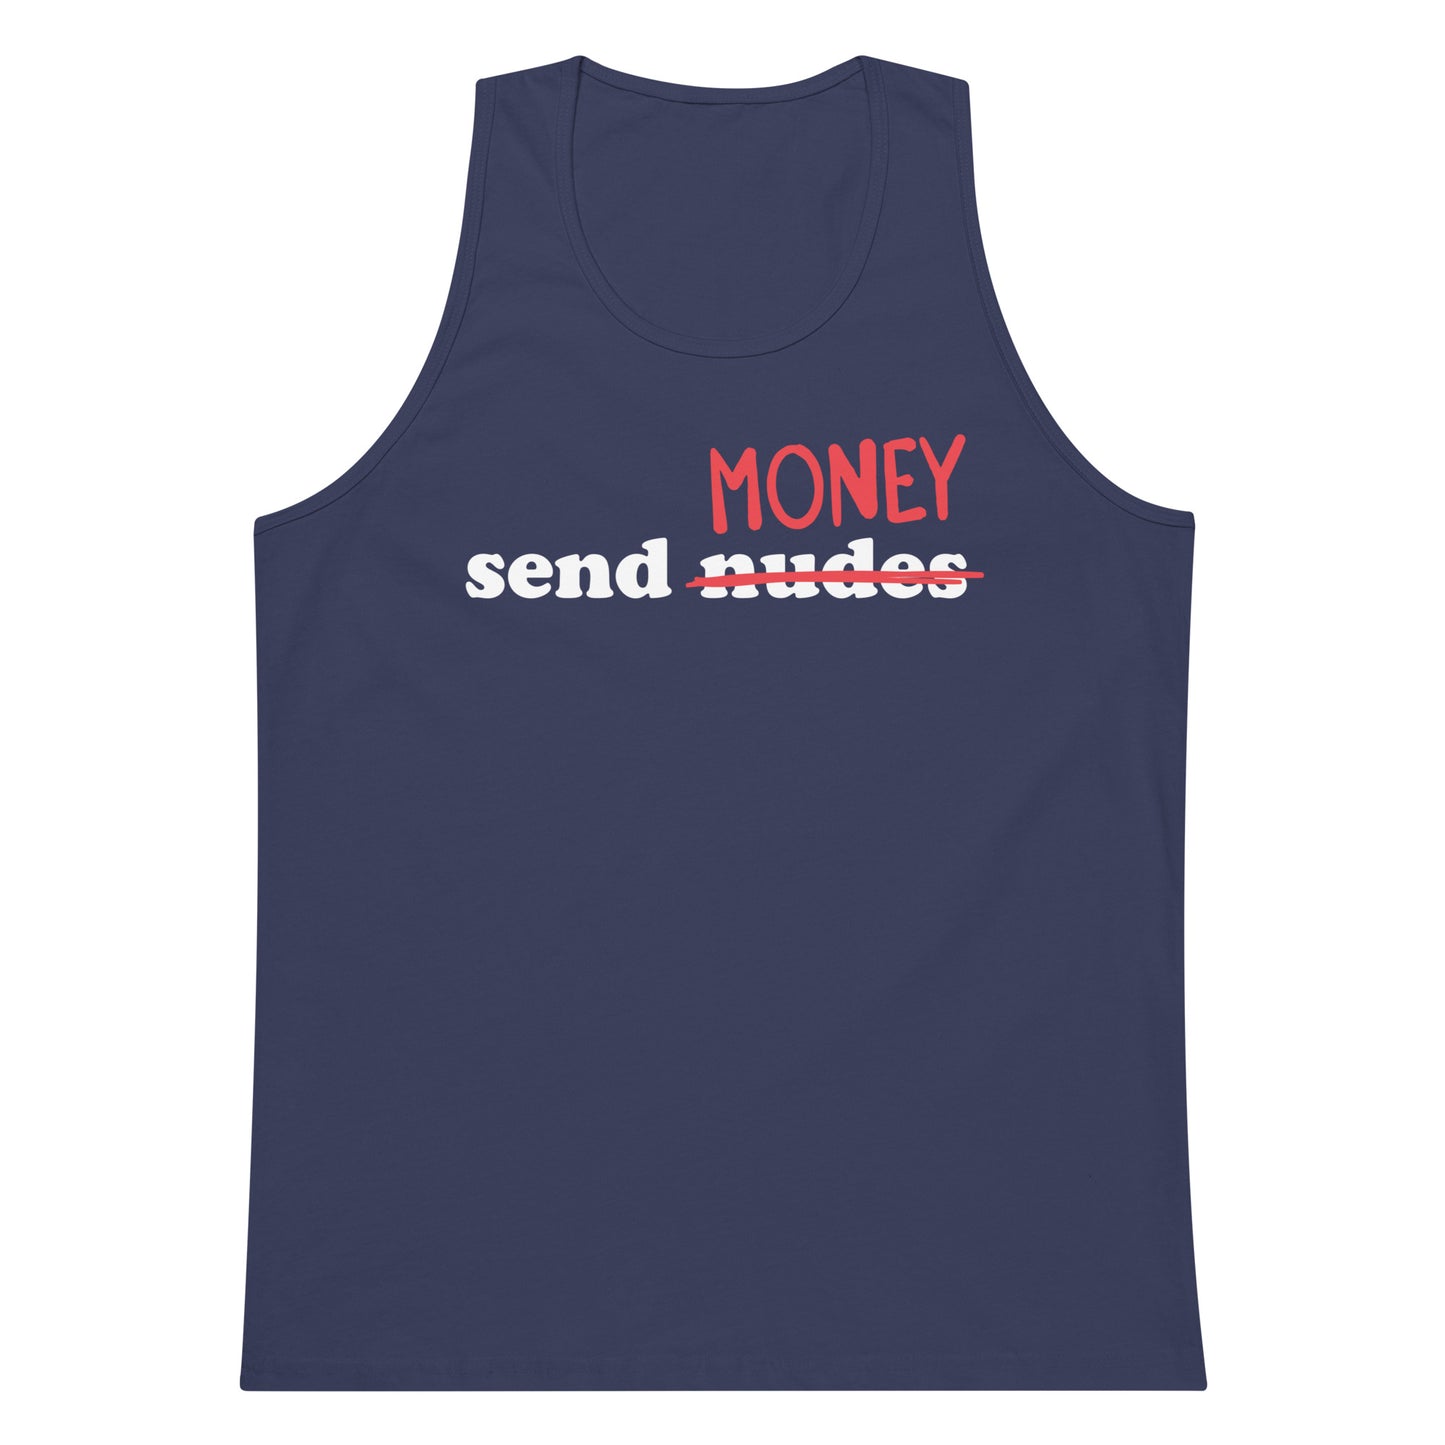 Send Money tank top